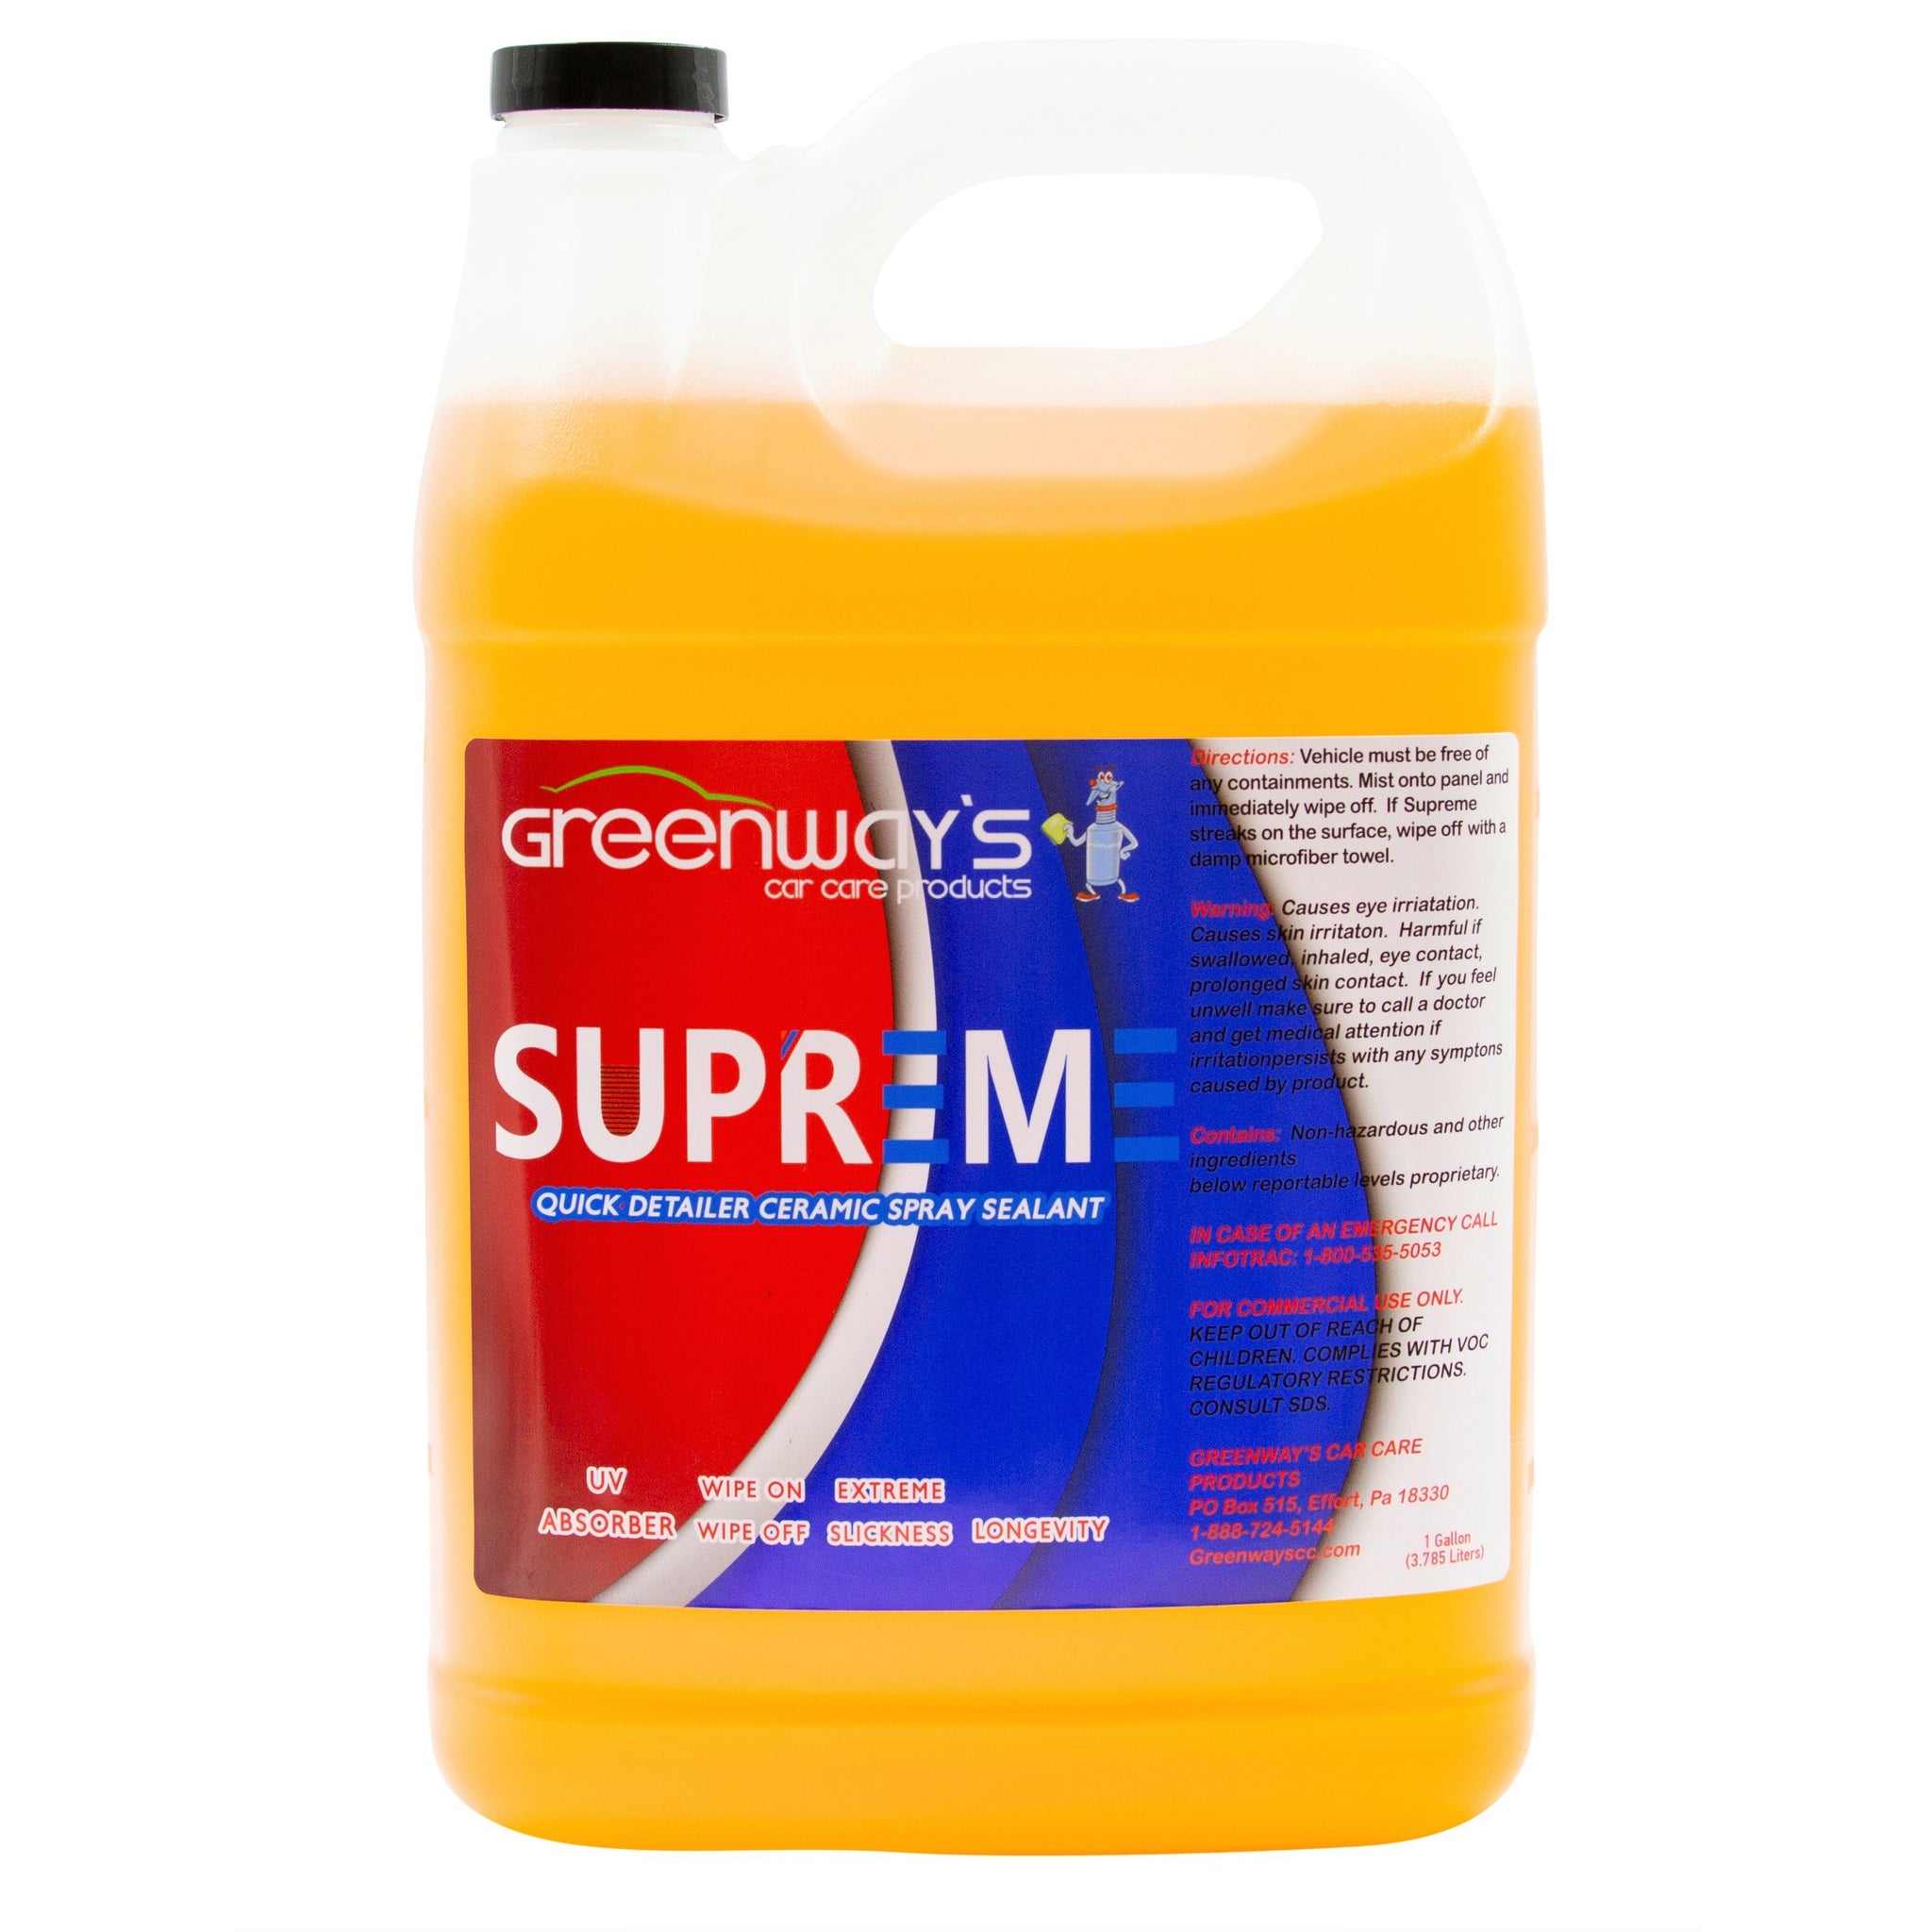 Formula 4 Spray 4 Wax - Superior Products